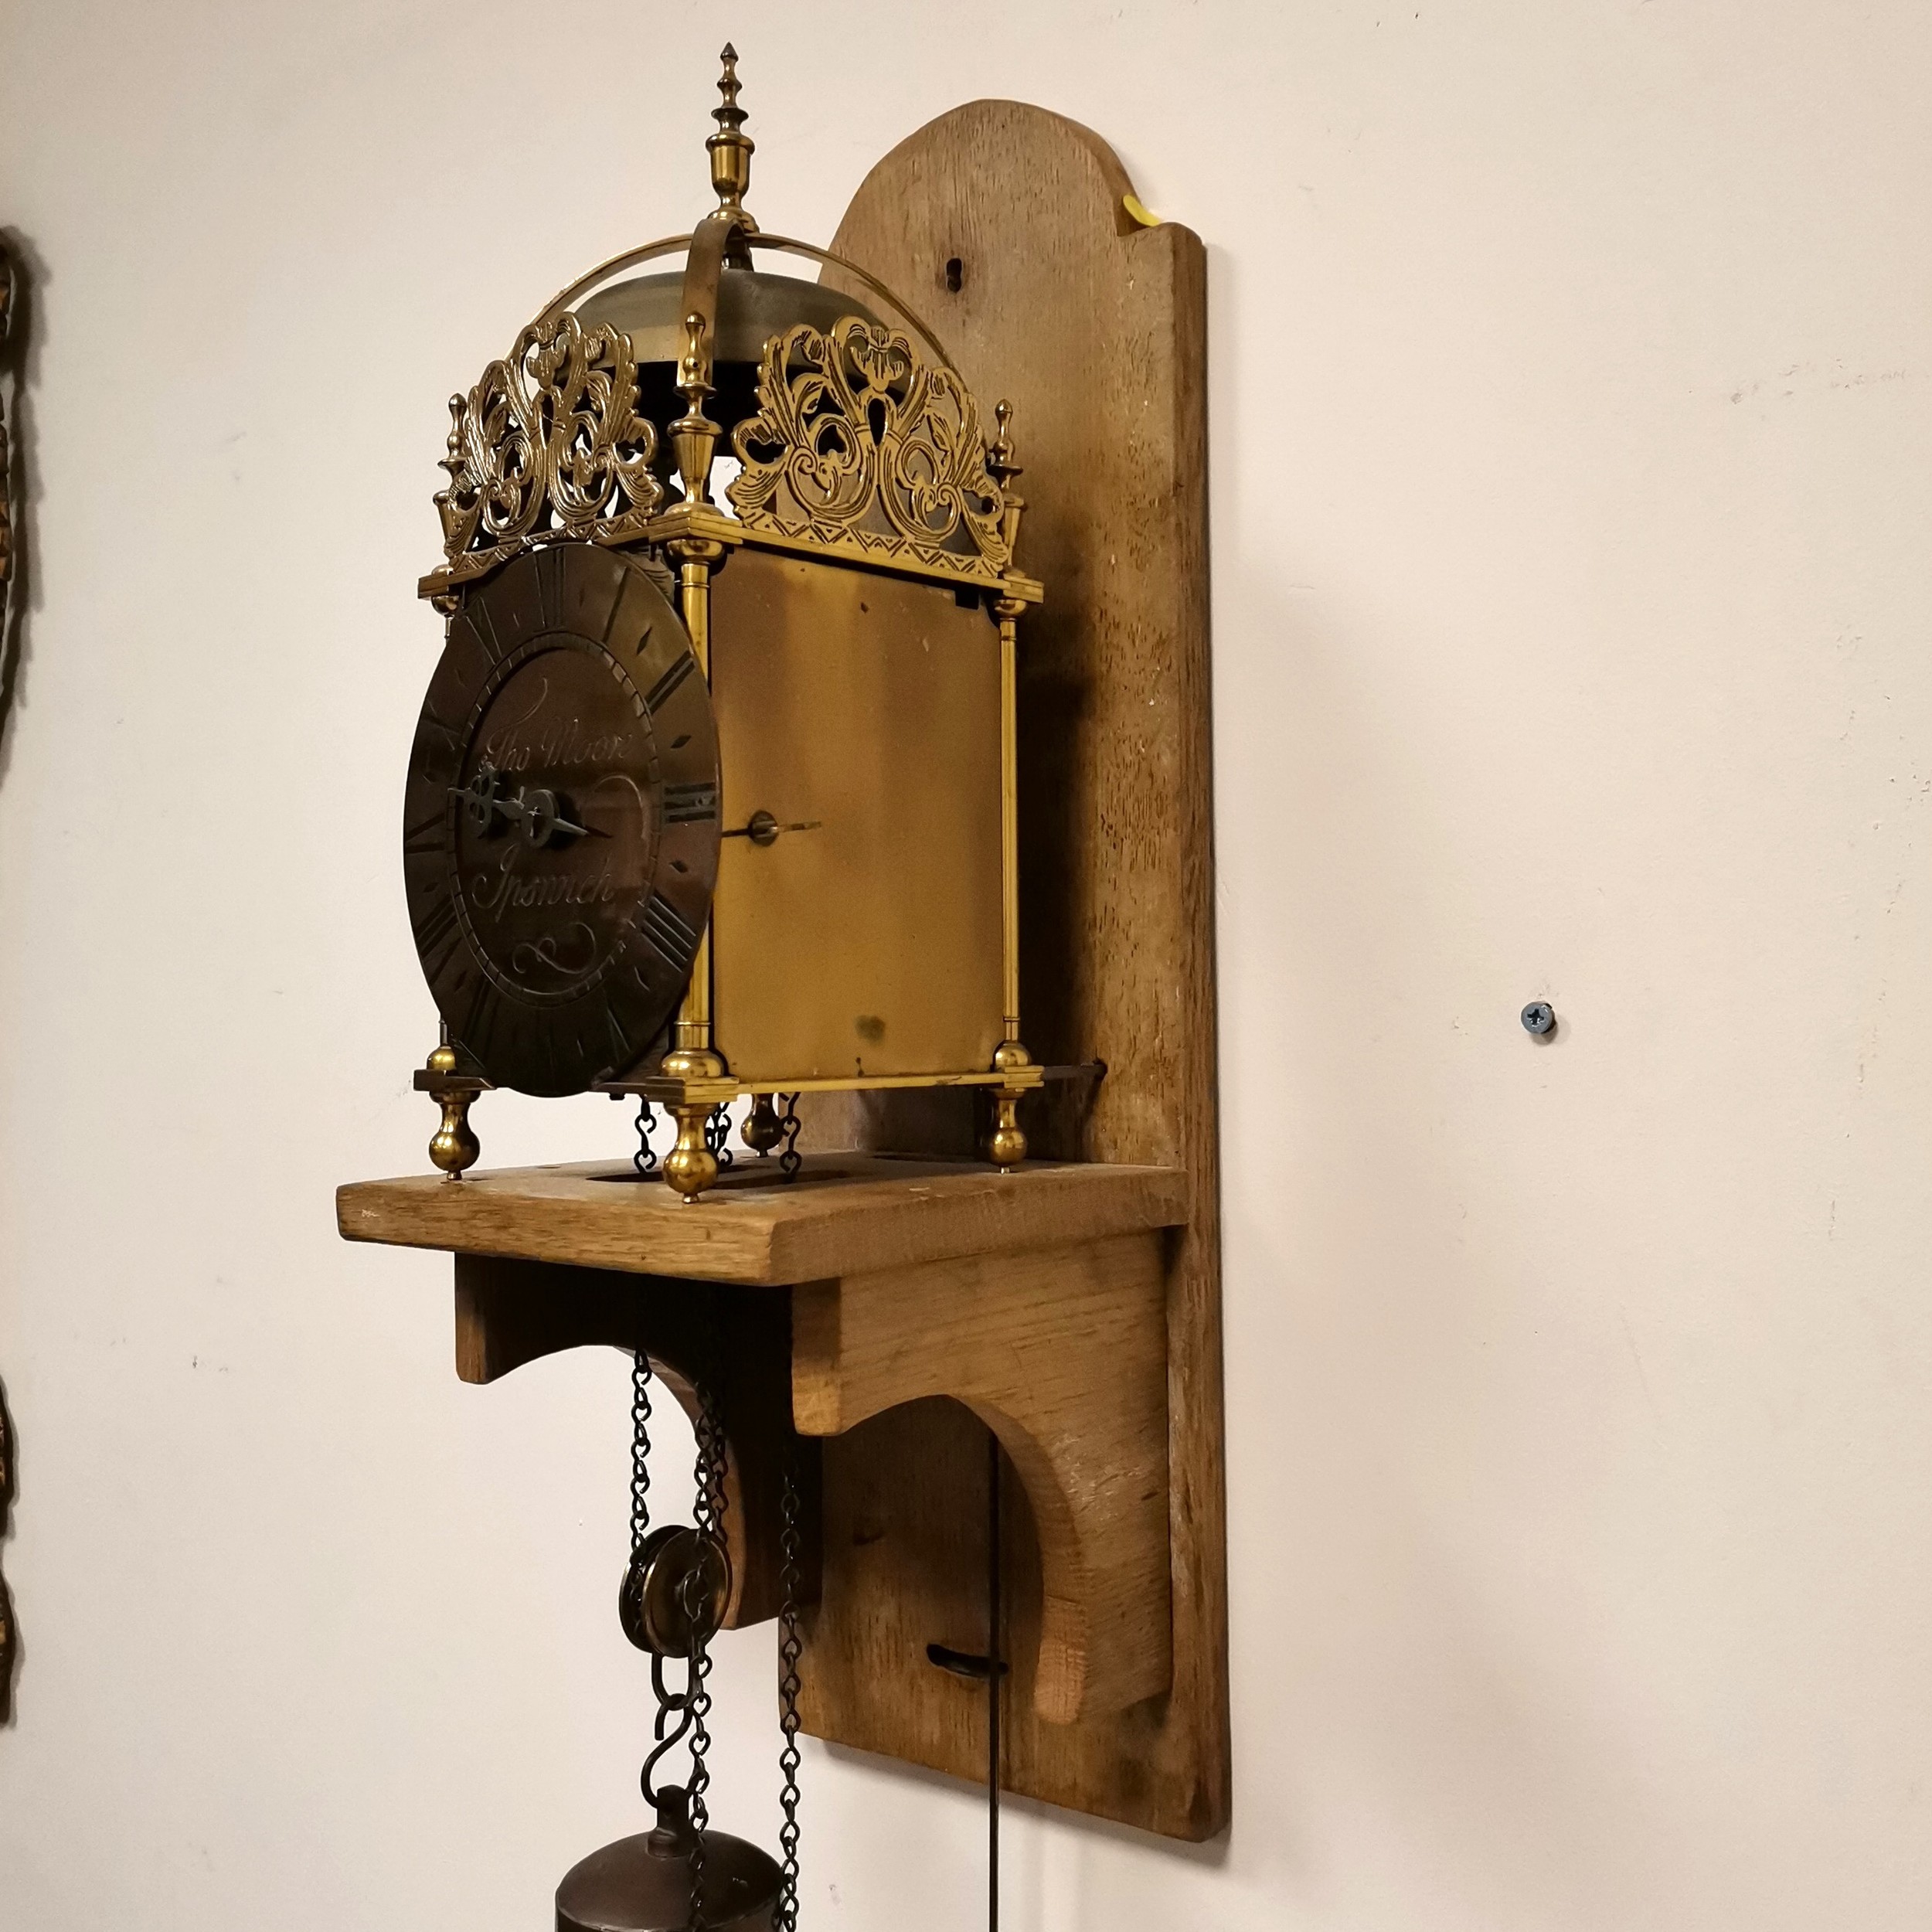 17th century style brass lantern bracket clock inscribed Thomas Moore, Ipswich on an oak wooden - Image 4 of 6